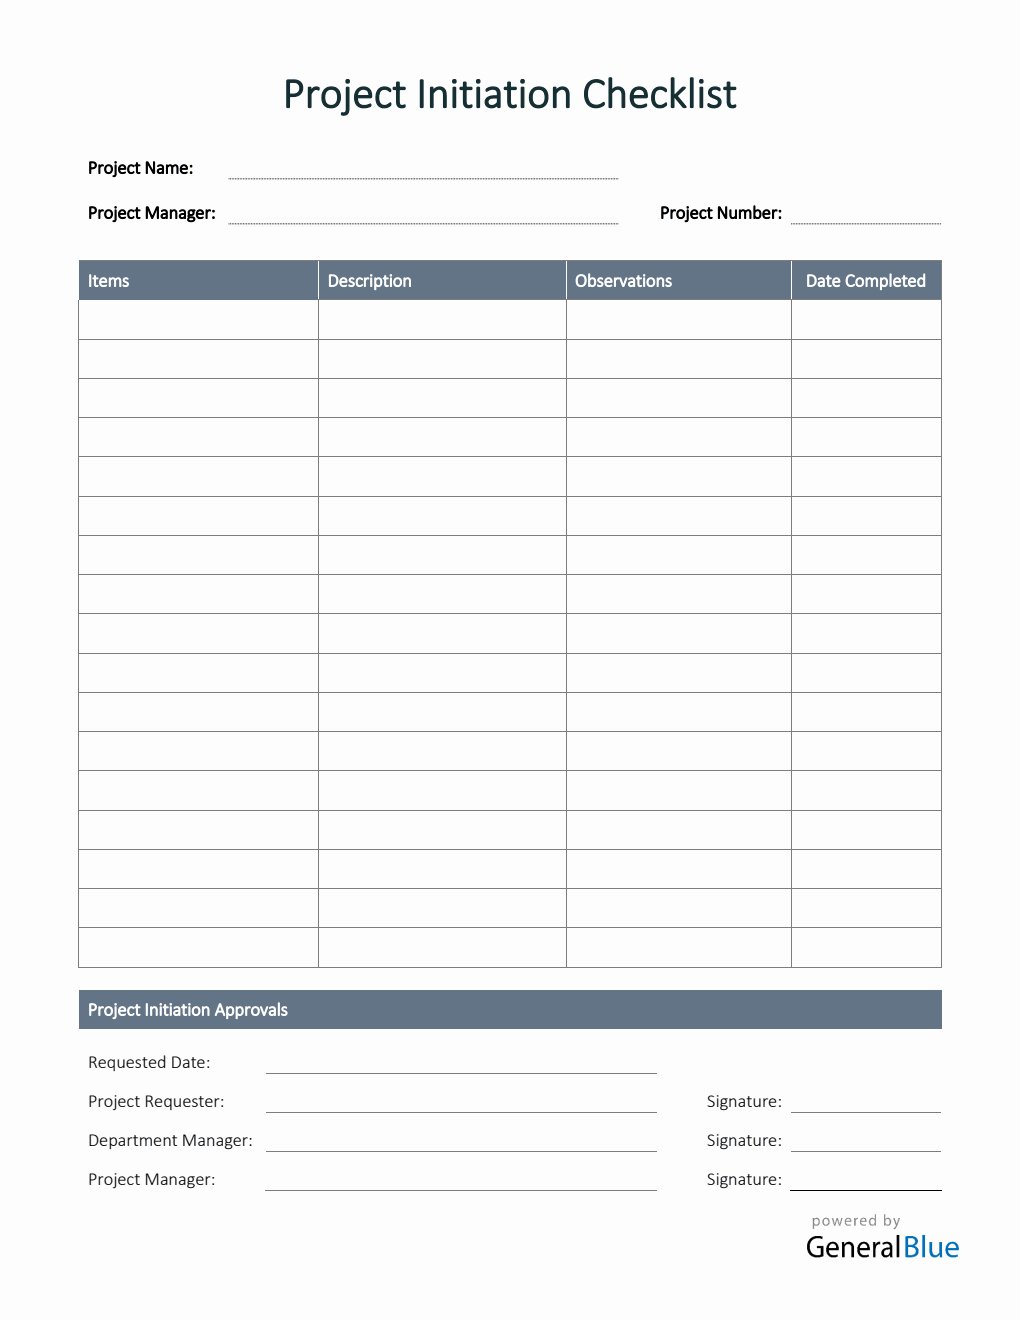 Project Initiation Checklist in PDF